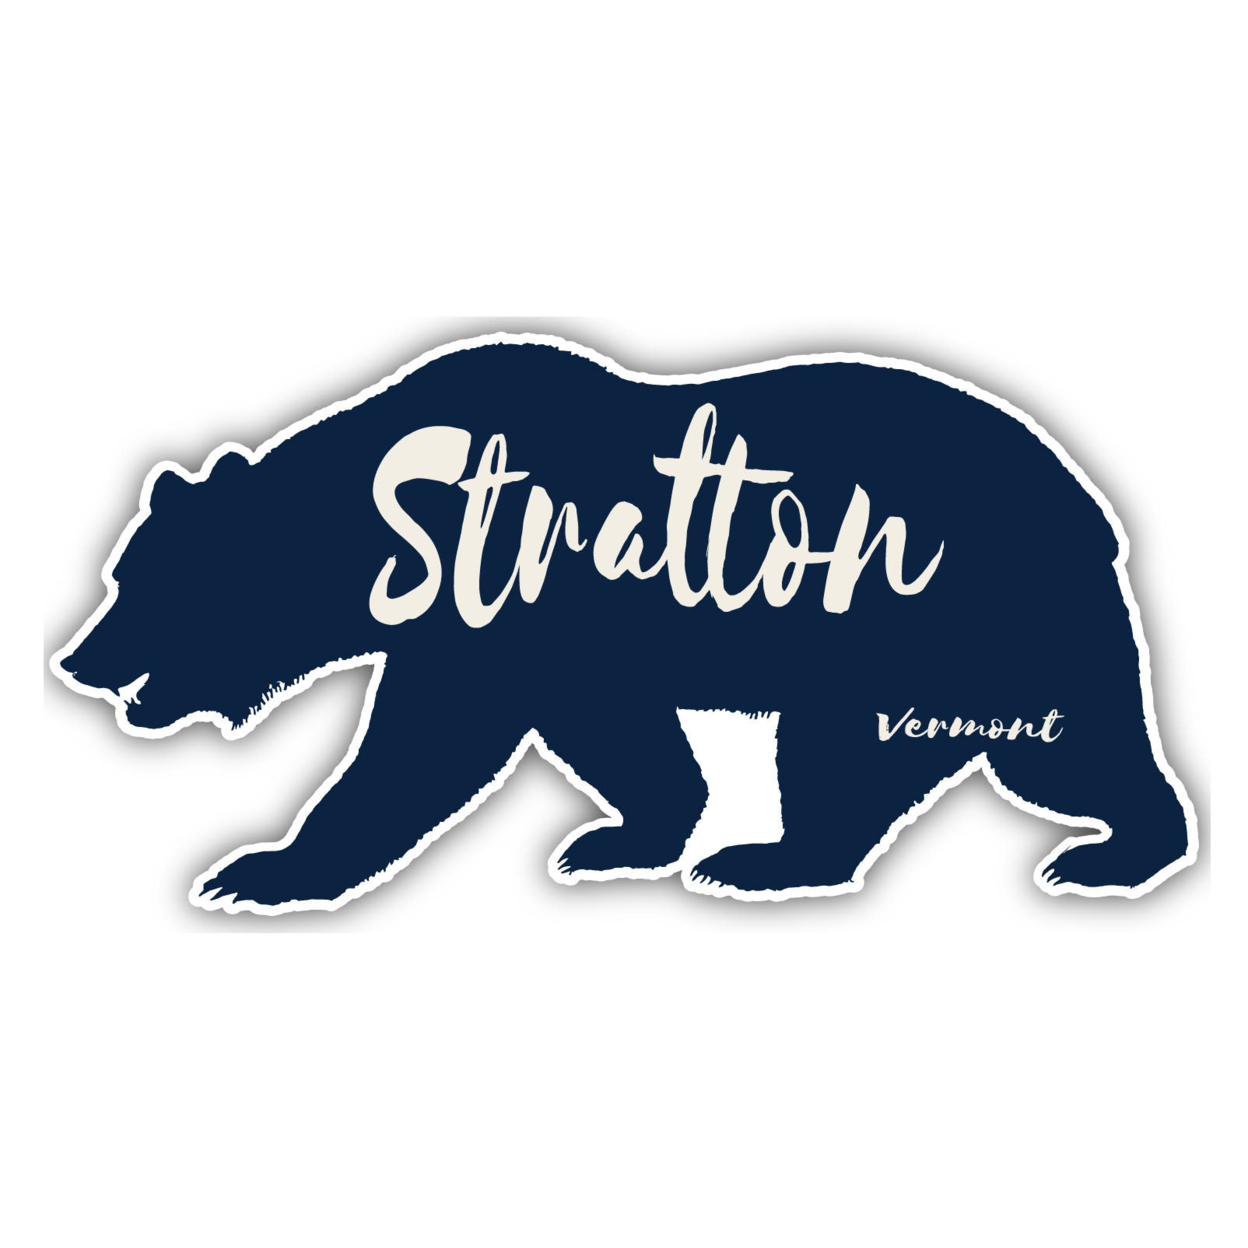 Stratton Vermont Souvenir Decorative Stickers (Choose Theme And Size) - Single Unit, 4-Inch, Bear